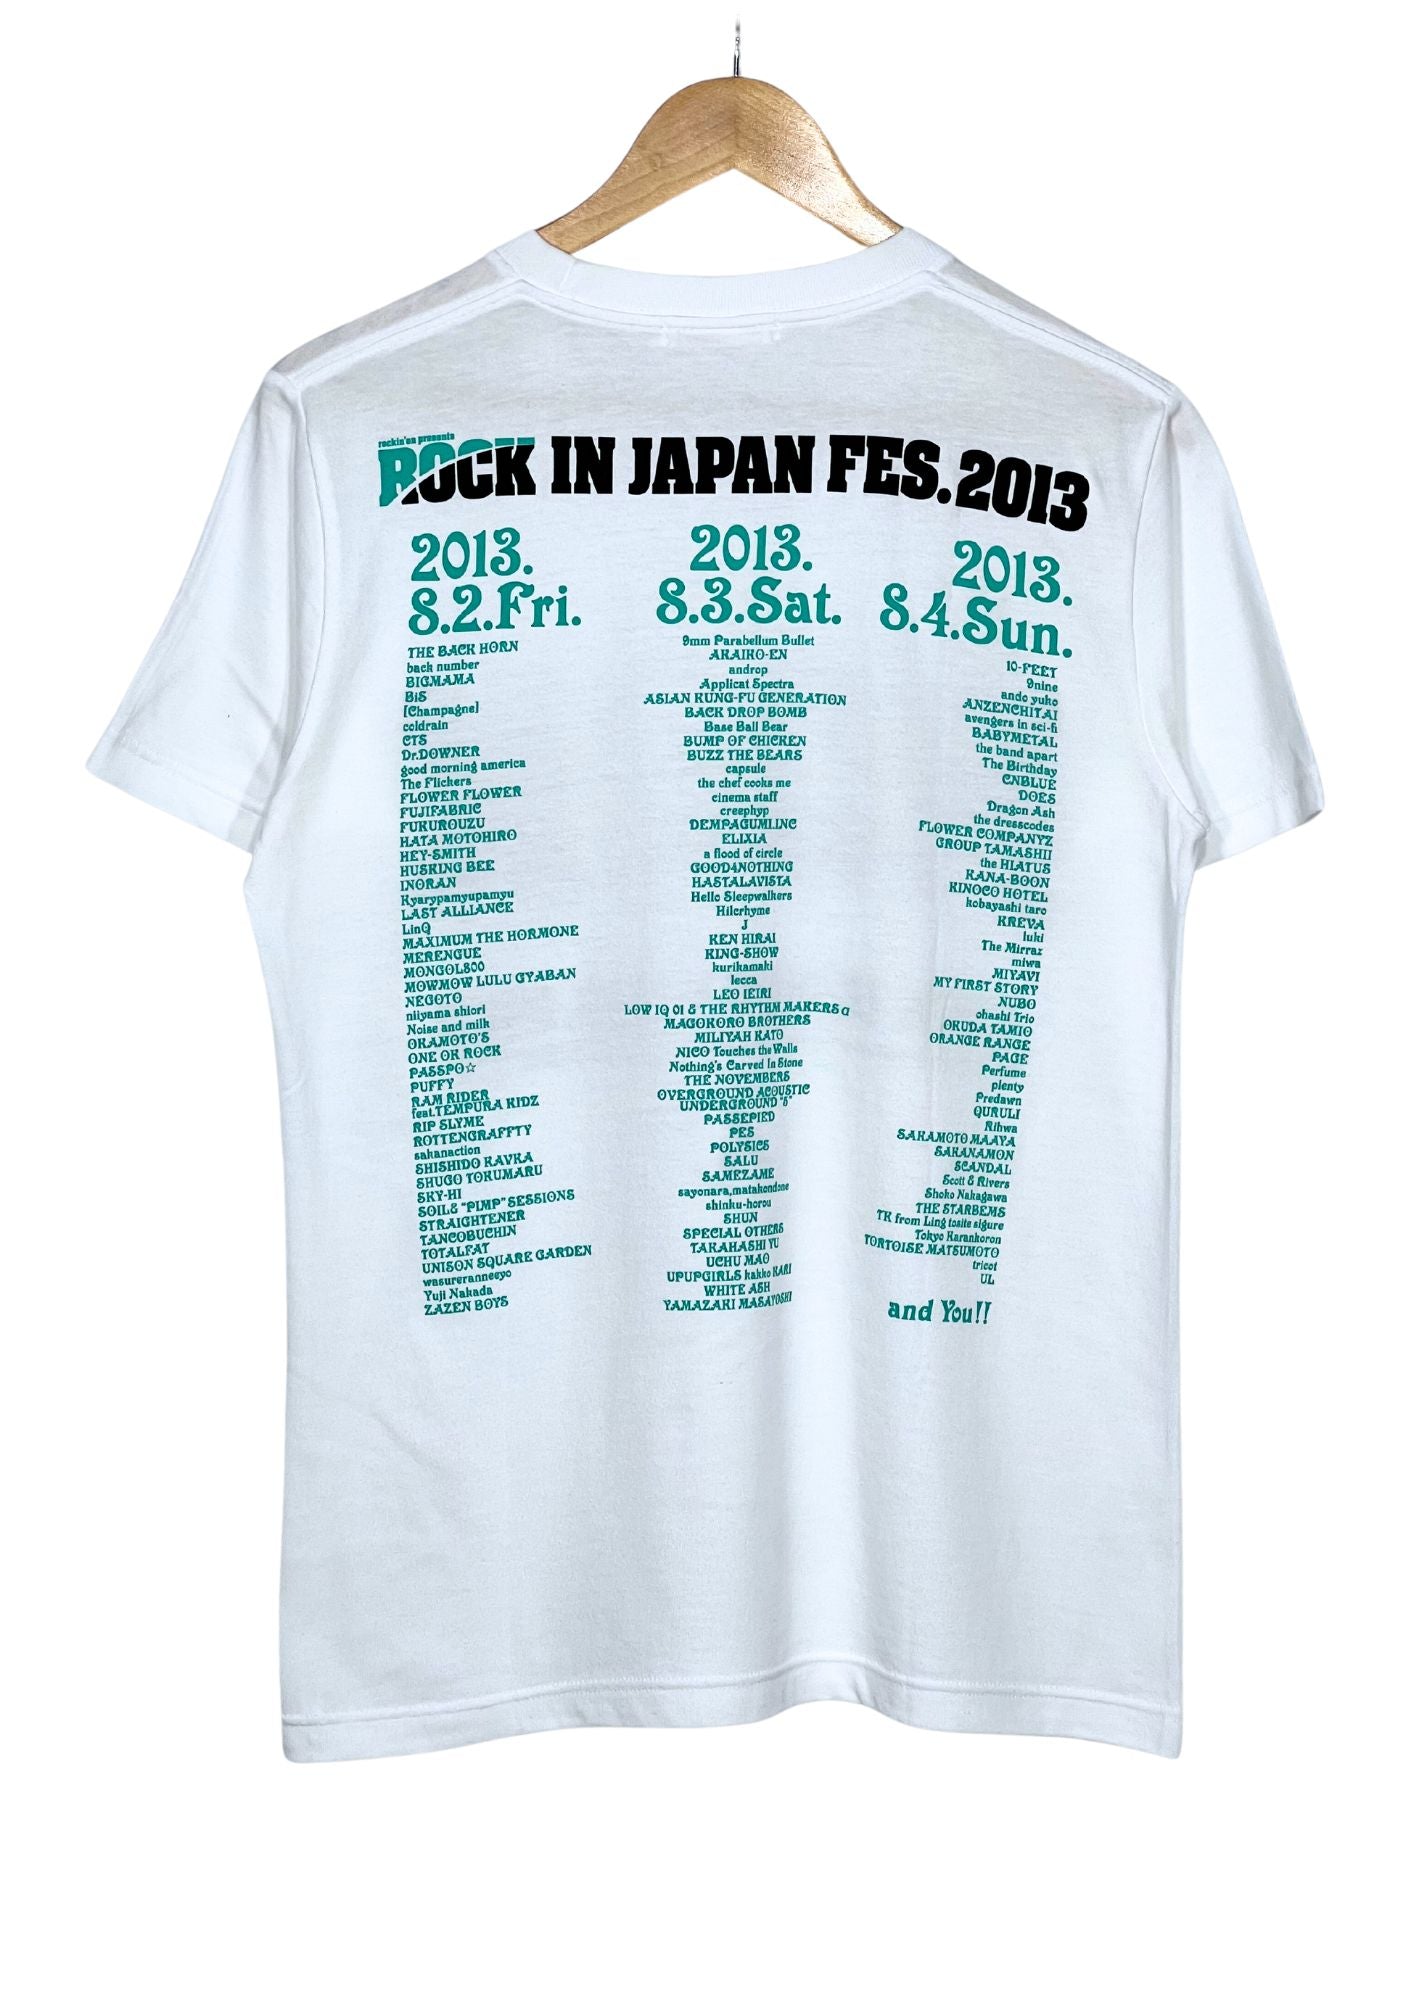 2013 Studio Ghibli Princess Mononoke x Rockin'on Rock in Japan Fes.Totoro T-shirt